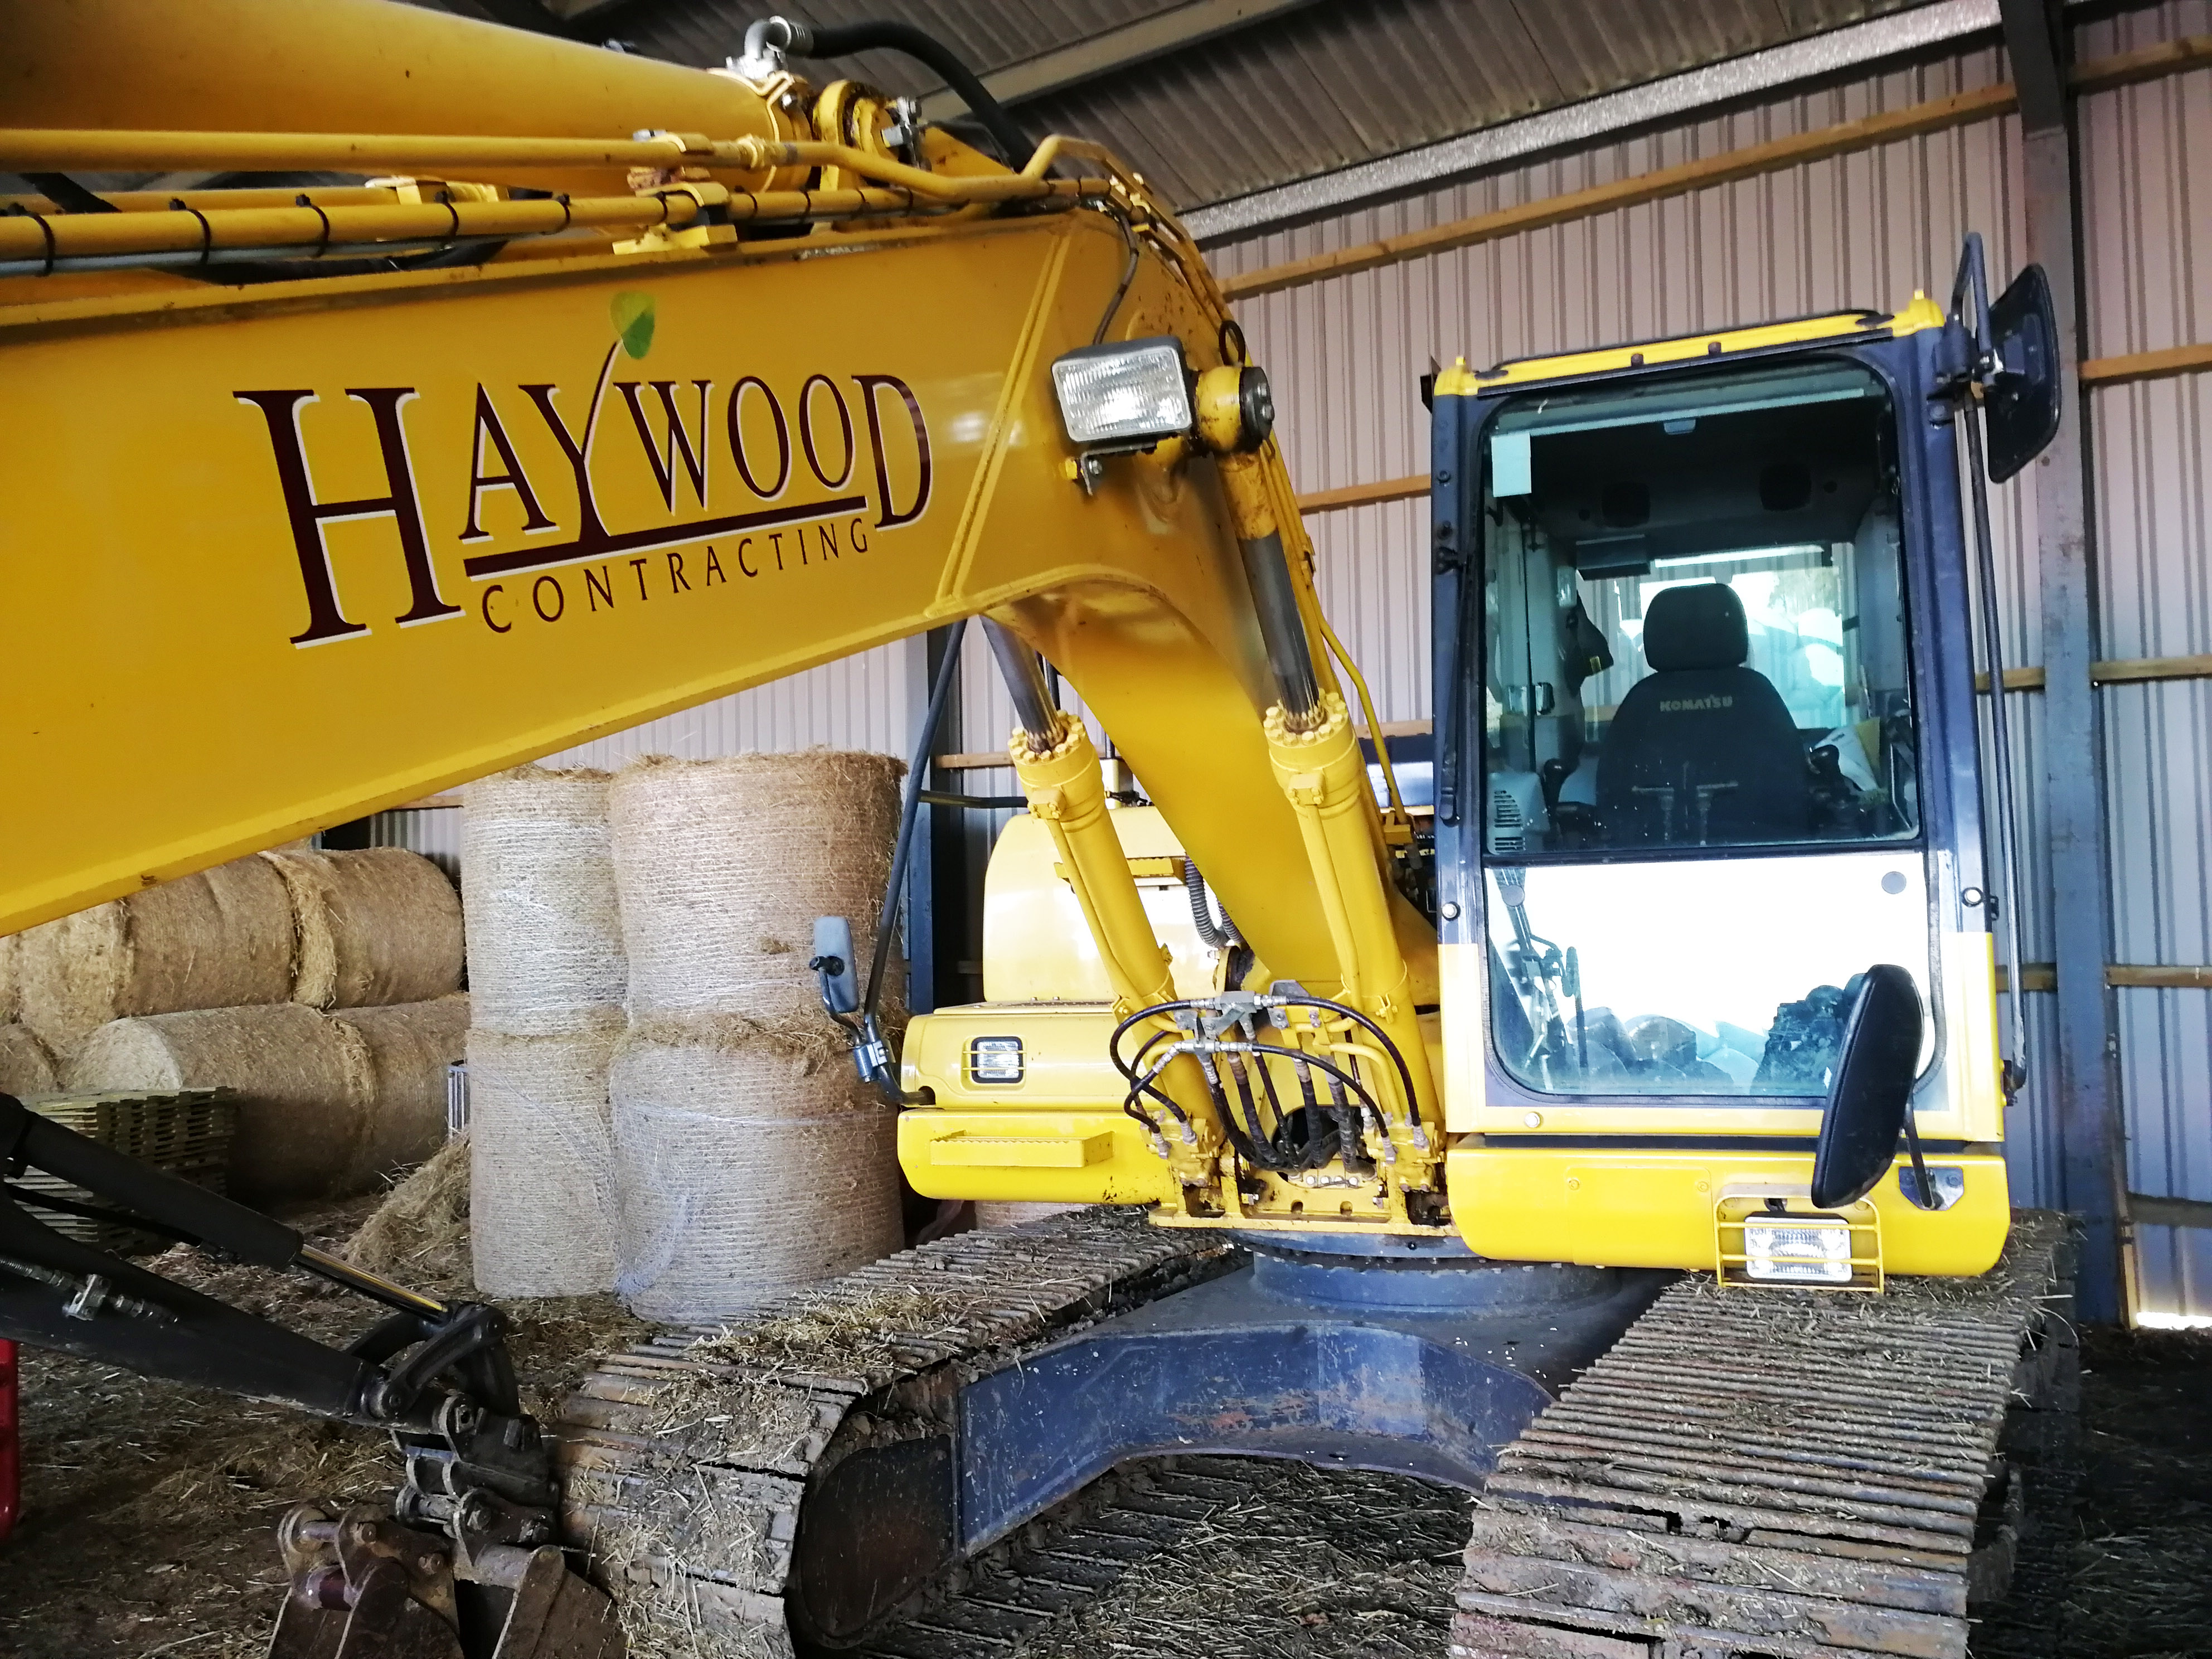 Haywood Contracting